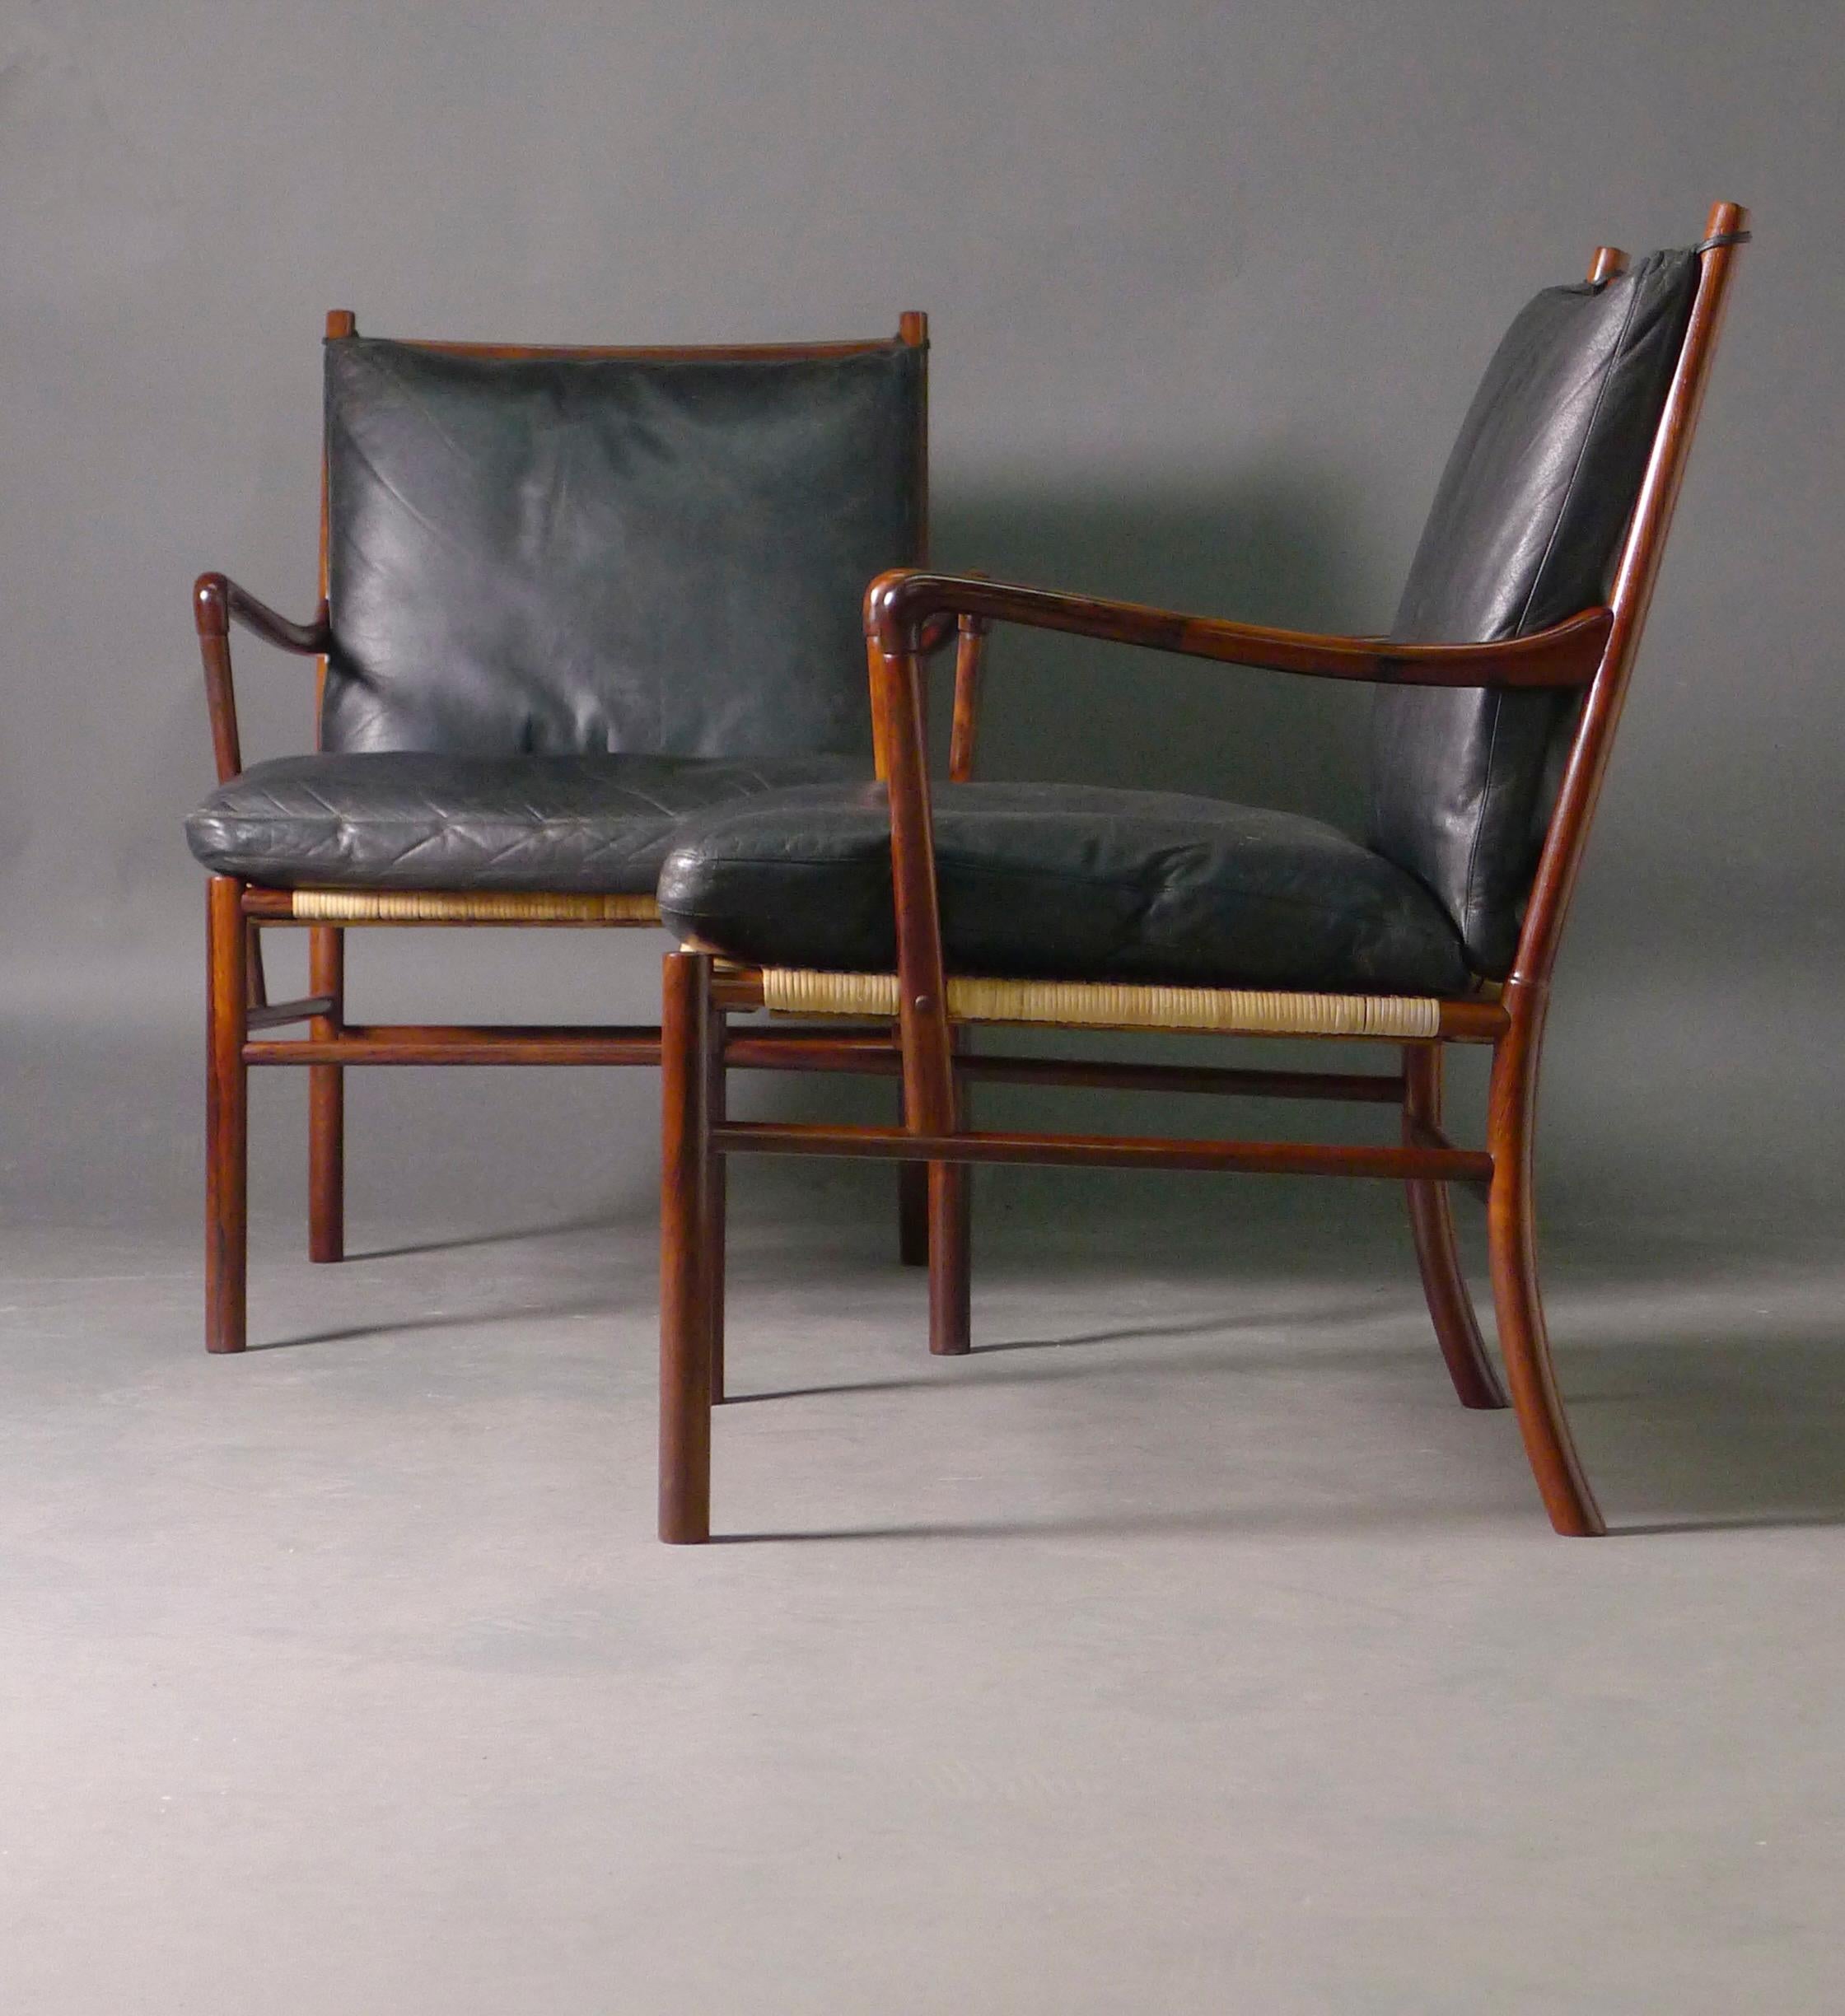 Scandinavian Modern Ole Wanscher, Pair of Colonial Chairs, model PJ149, 1st Edition 1949, Rosewood